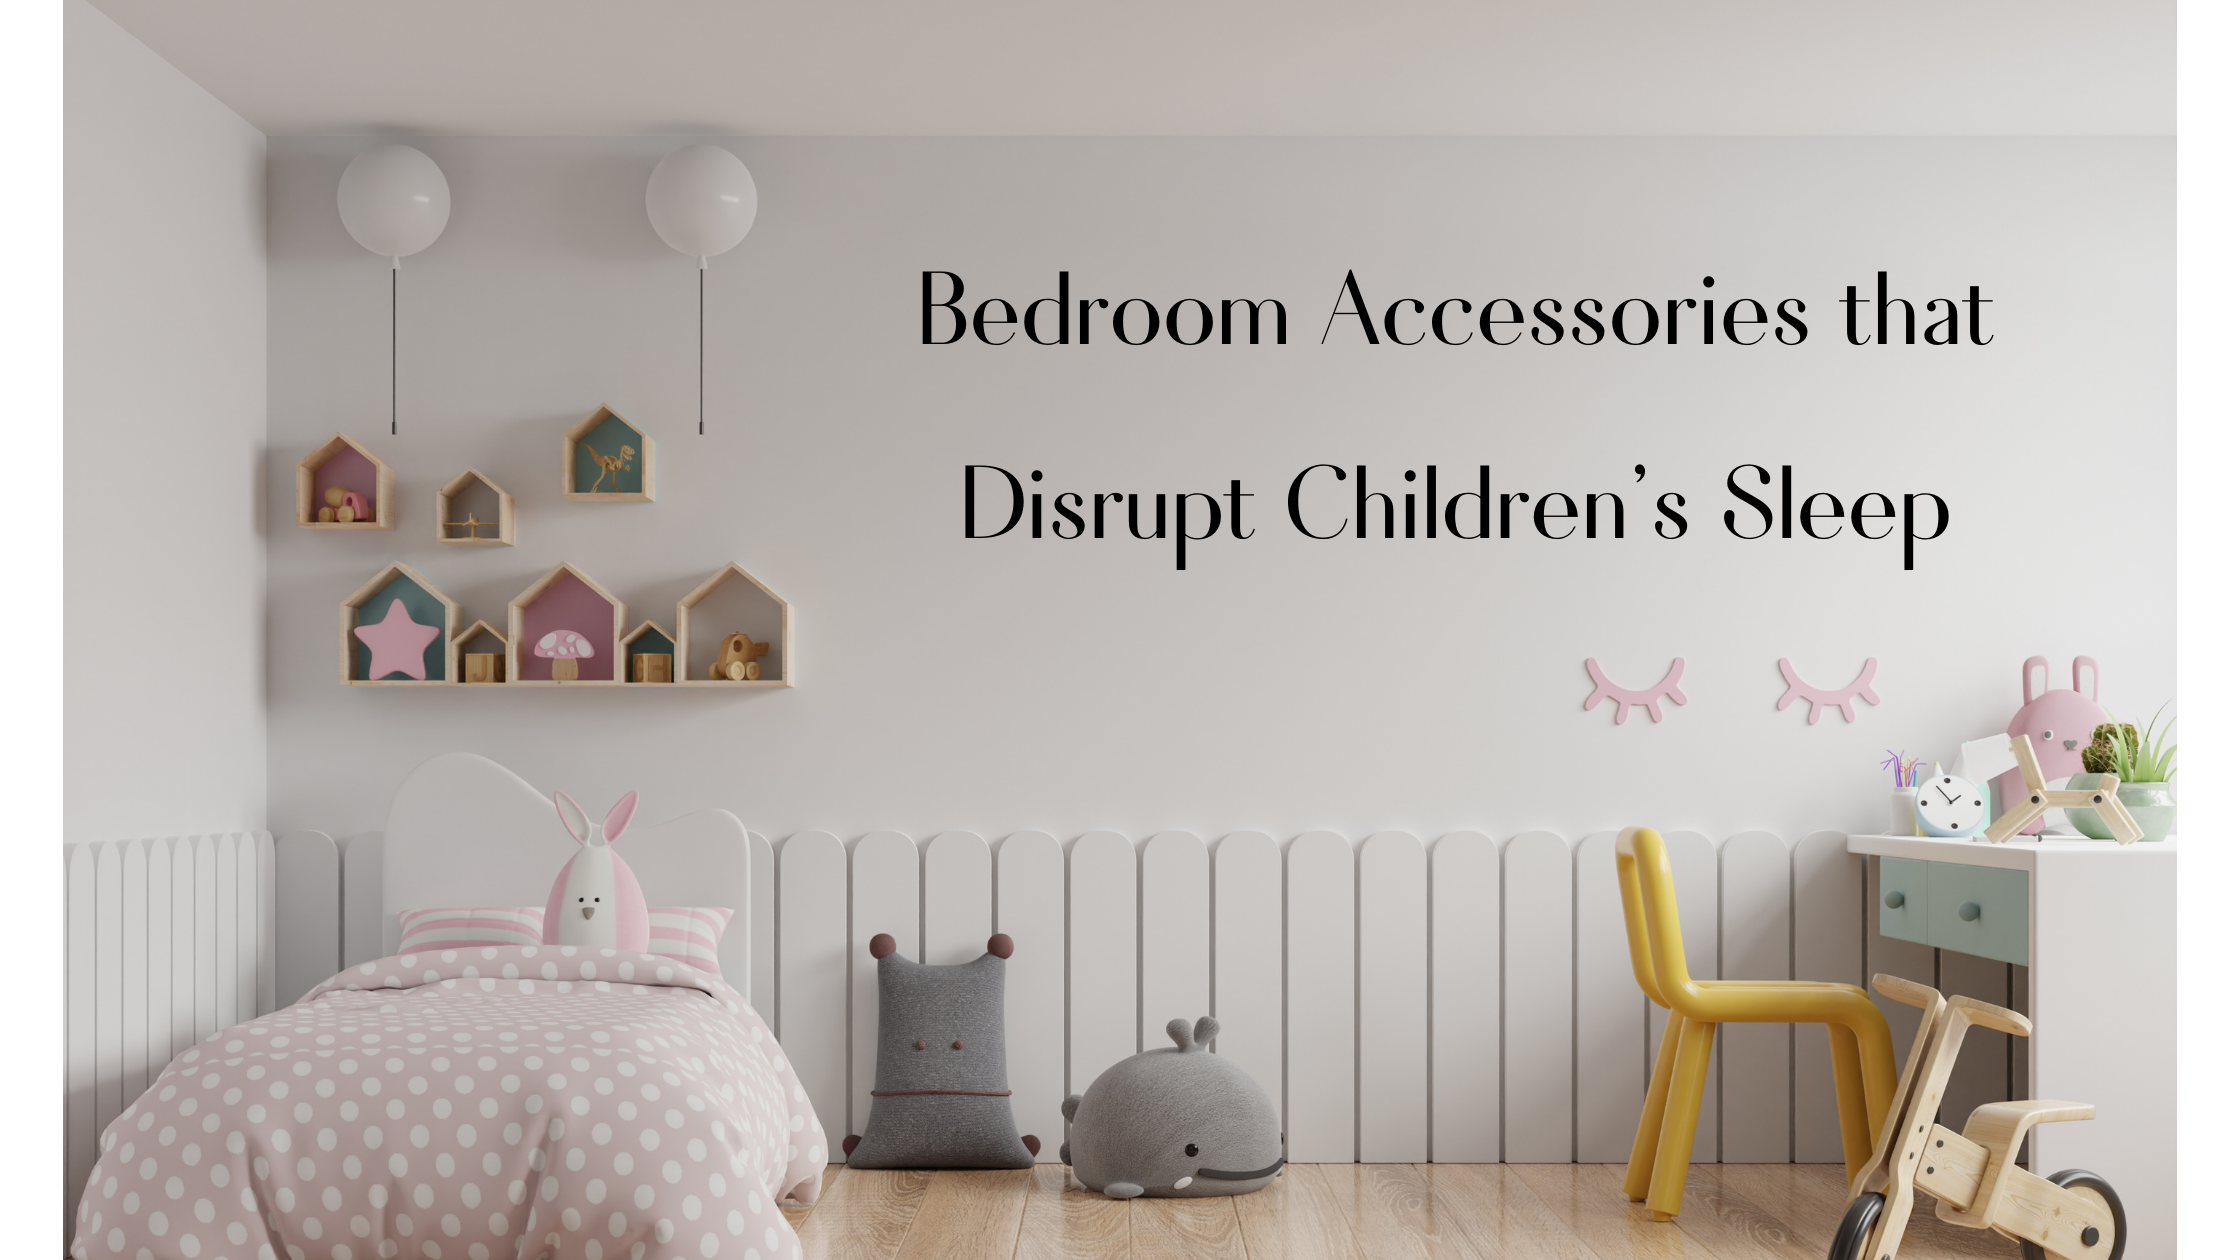 Bedroom Accessories that Disrupt Childrens Sleep